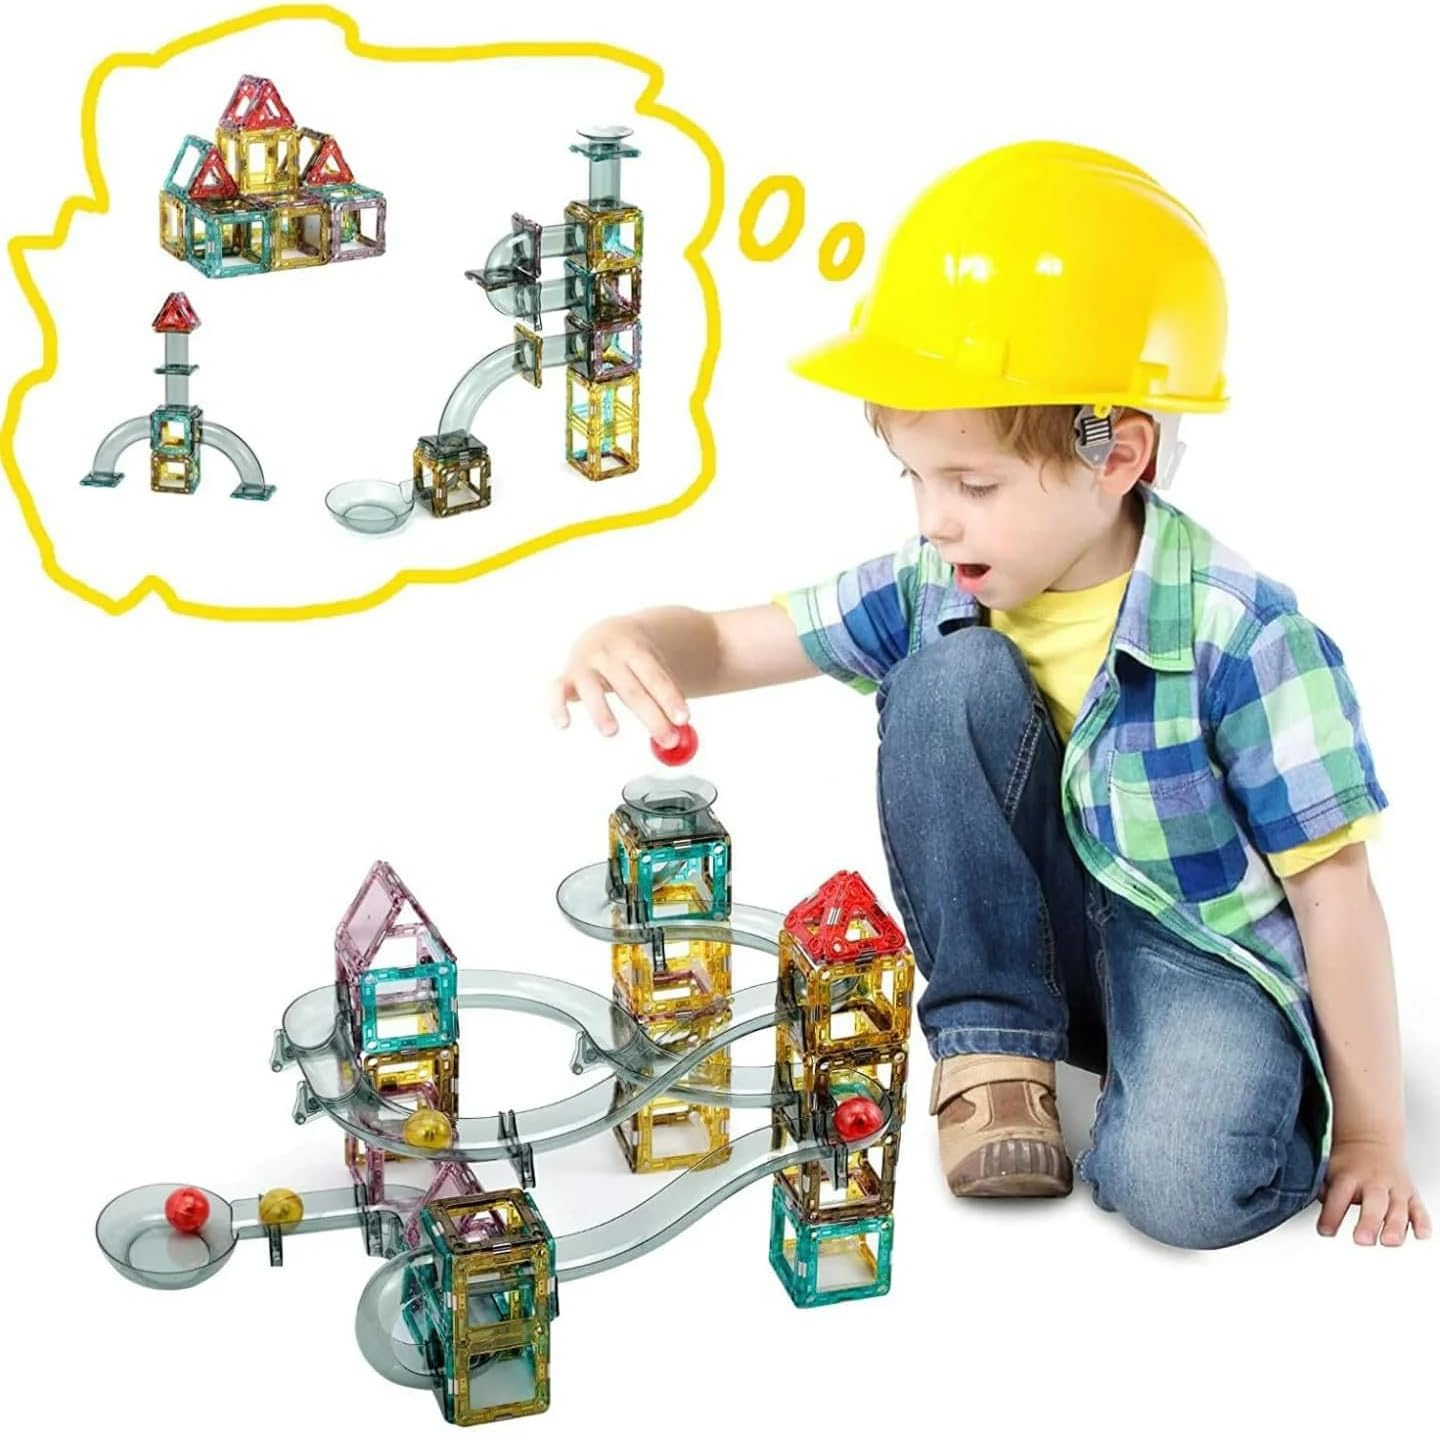 Magnetic Marble Roller 109 Pcs Light-Music-Electric Magnetic Tiles Building Blocks for Kids | 3D Educational STEM Puzzle Building Set for Kids Boys Girls